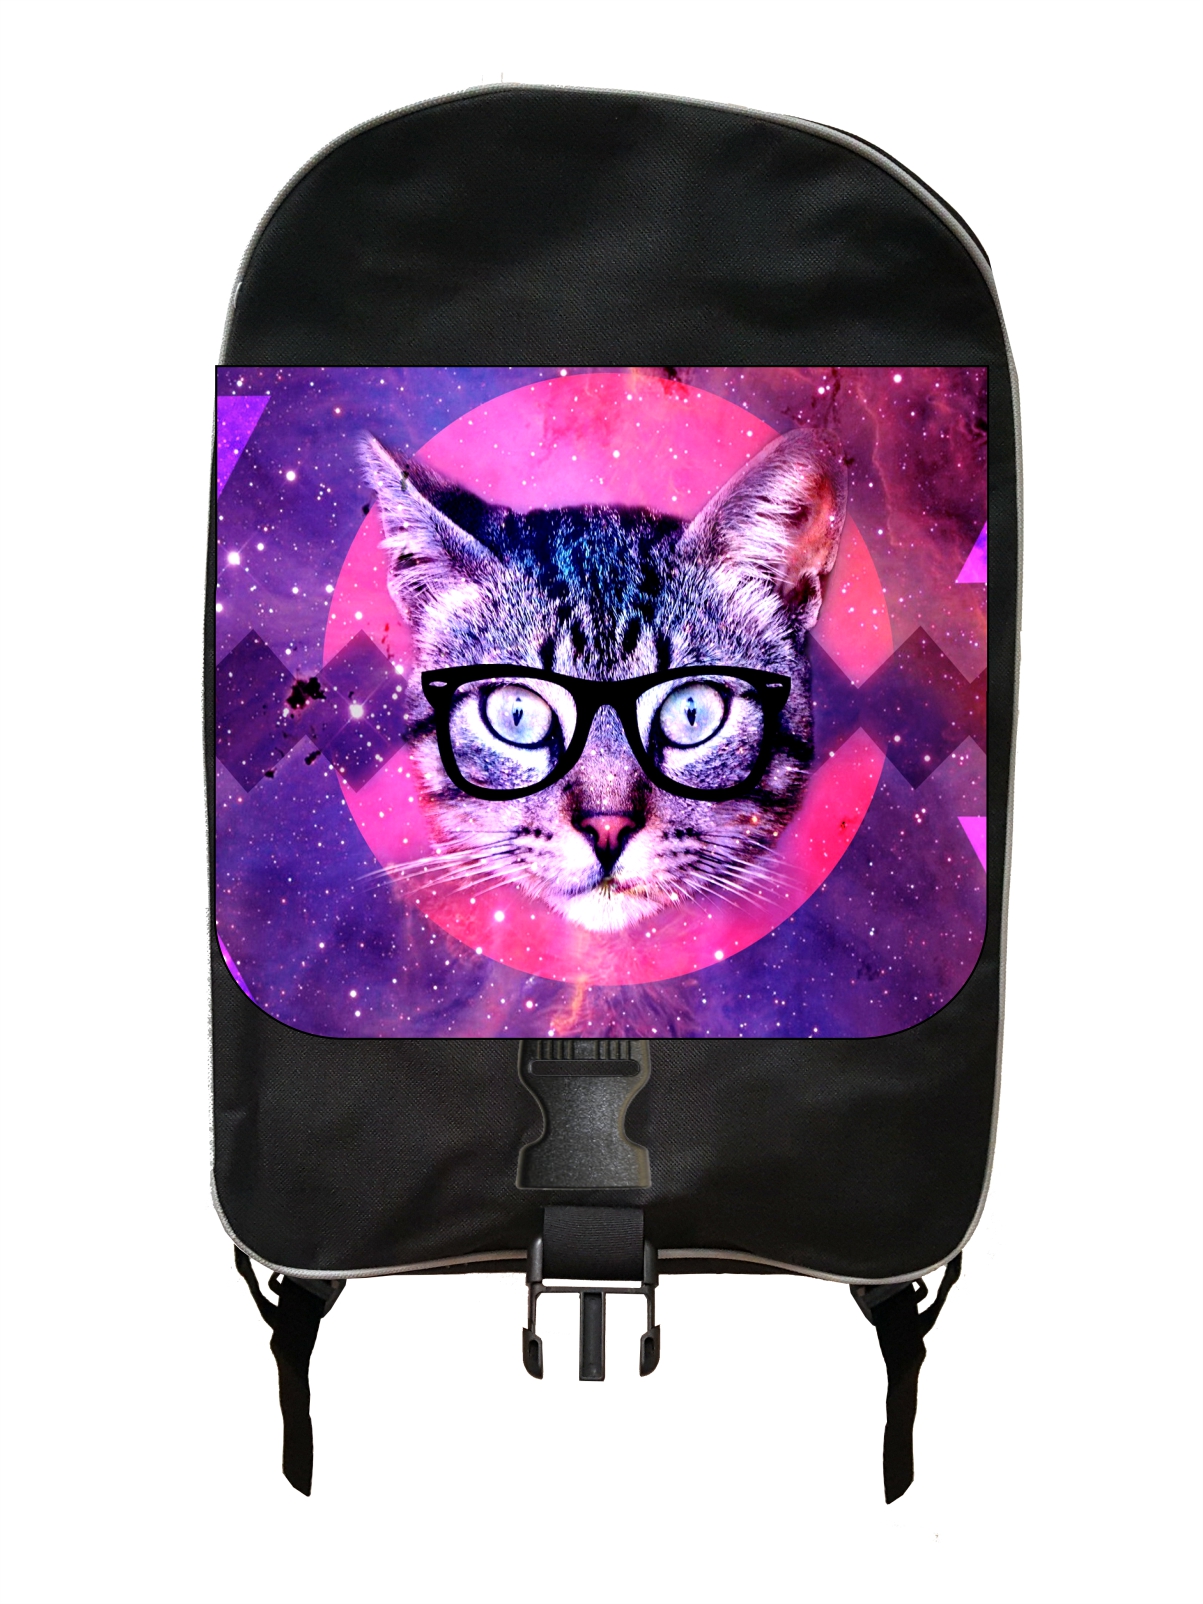 Hipster Galactic Kitten in Glasses - Girls Black School Backpack & Pencil Bag Set - image 1 of 5